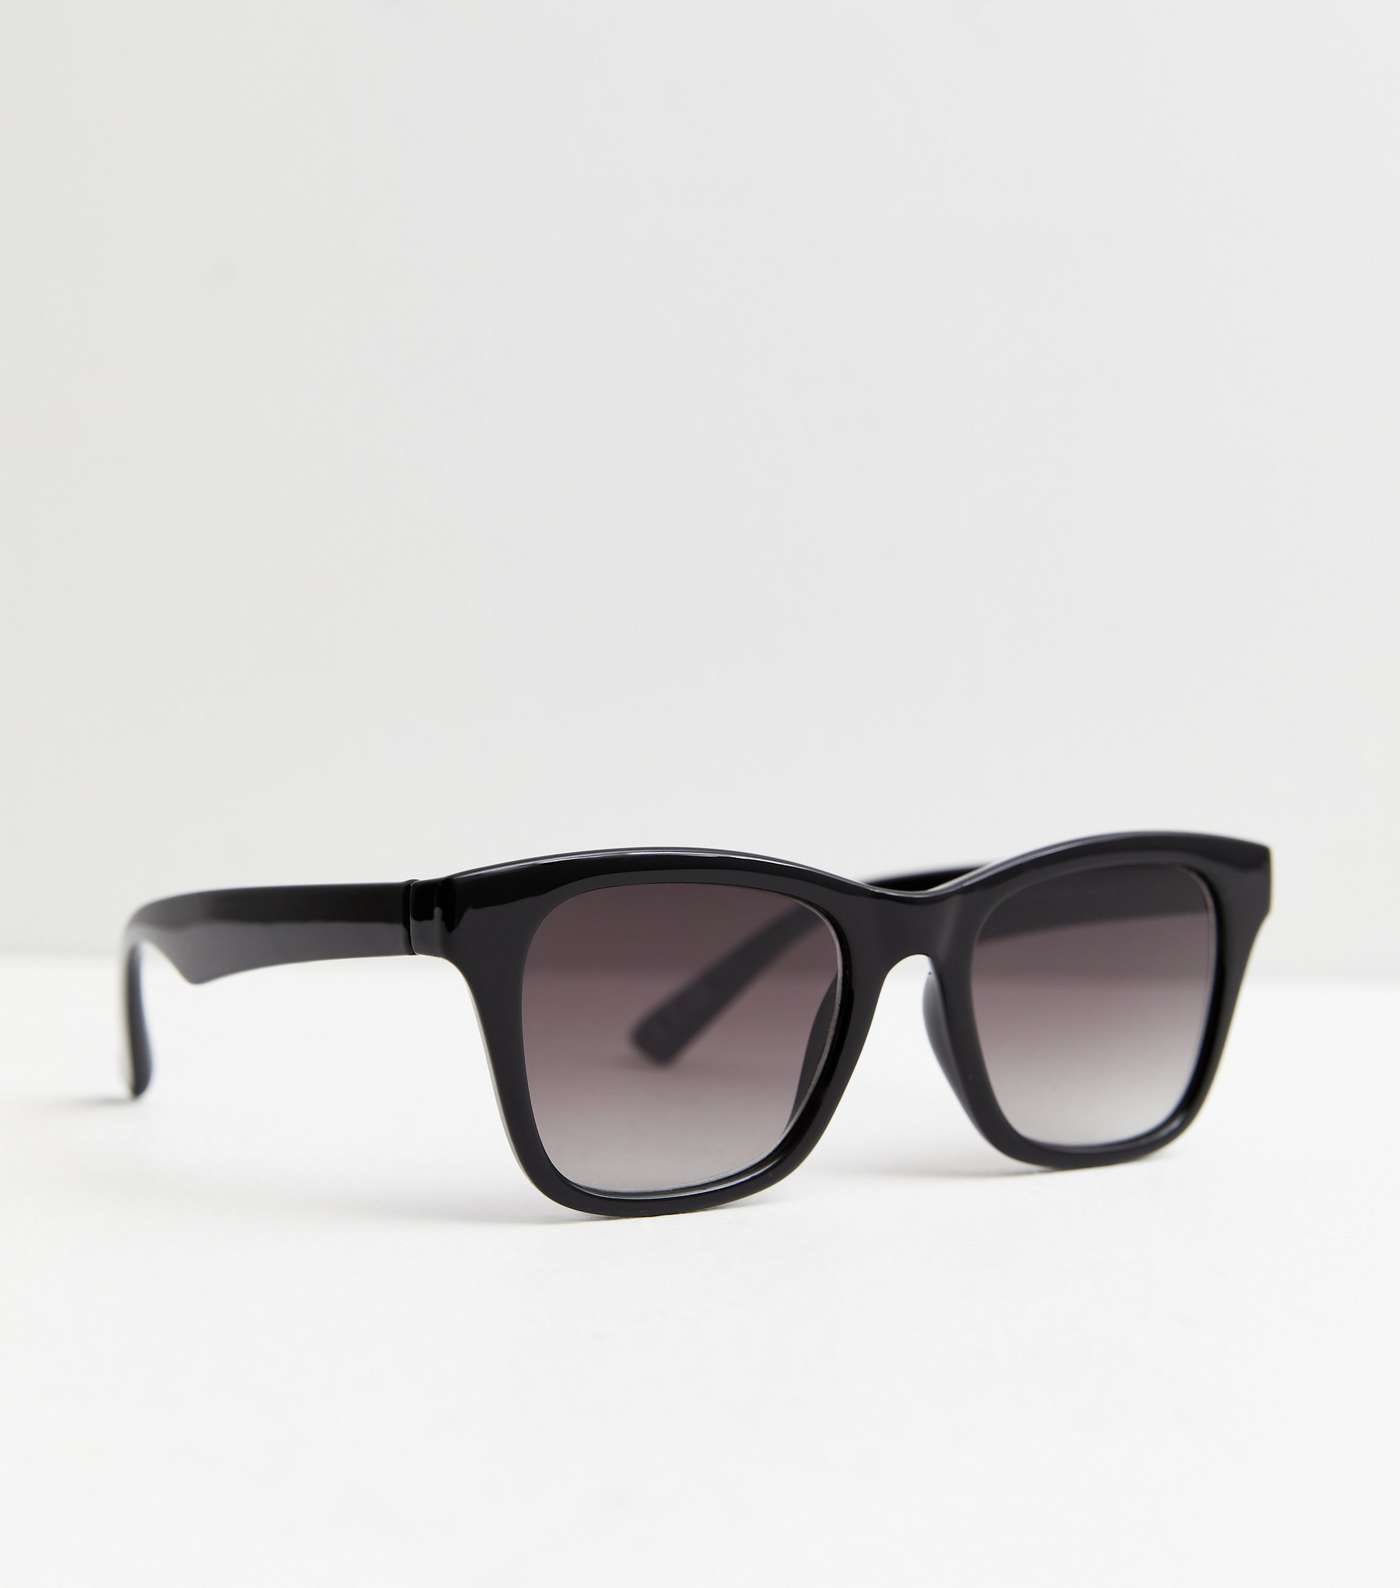 Black Square Retro Sunglasses Image 2